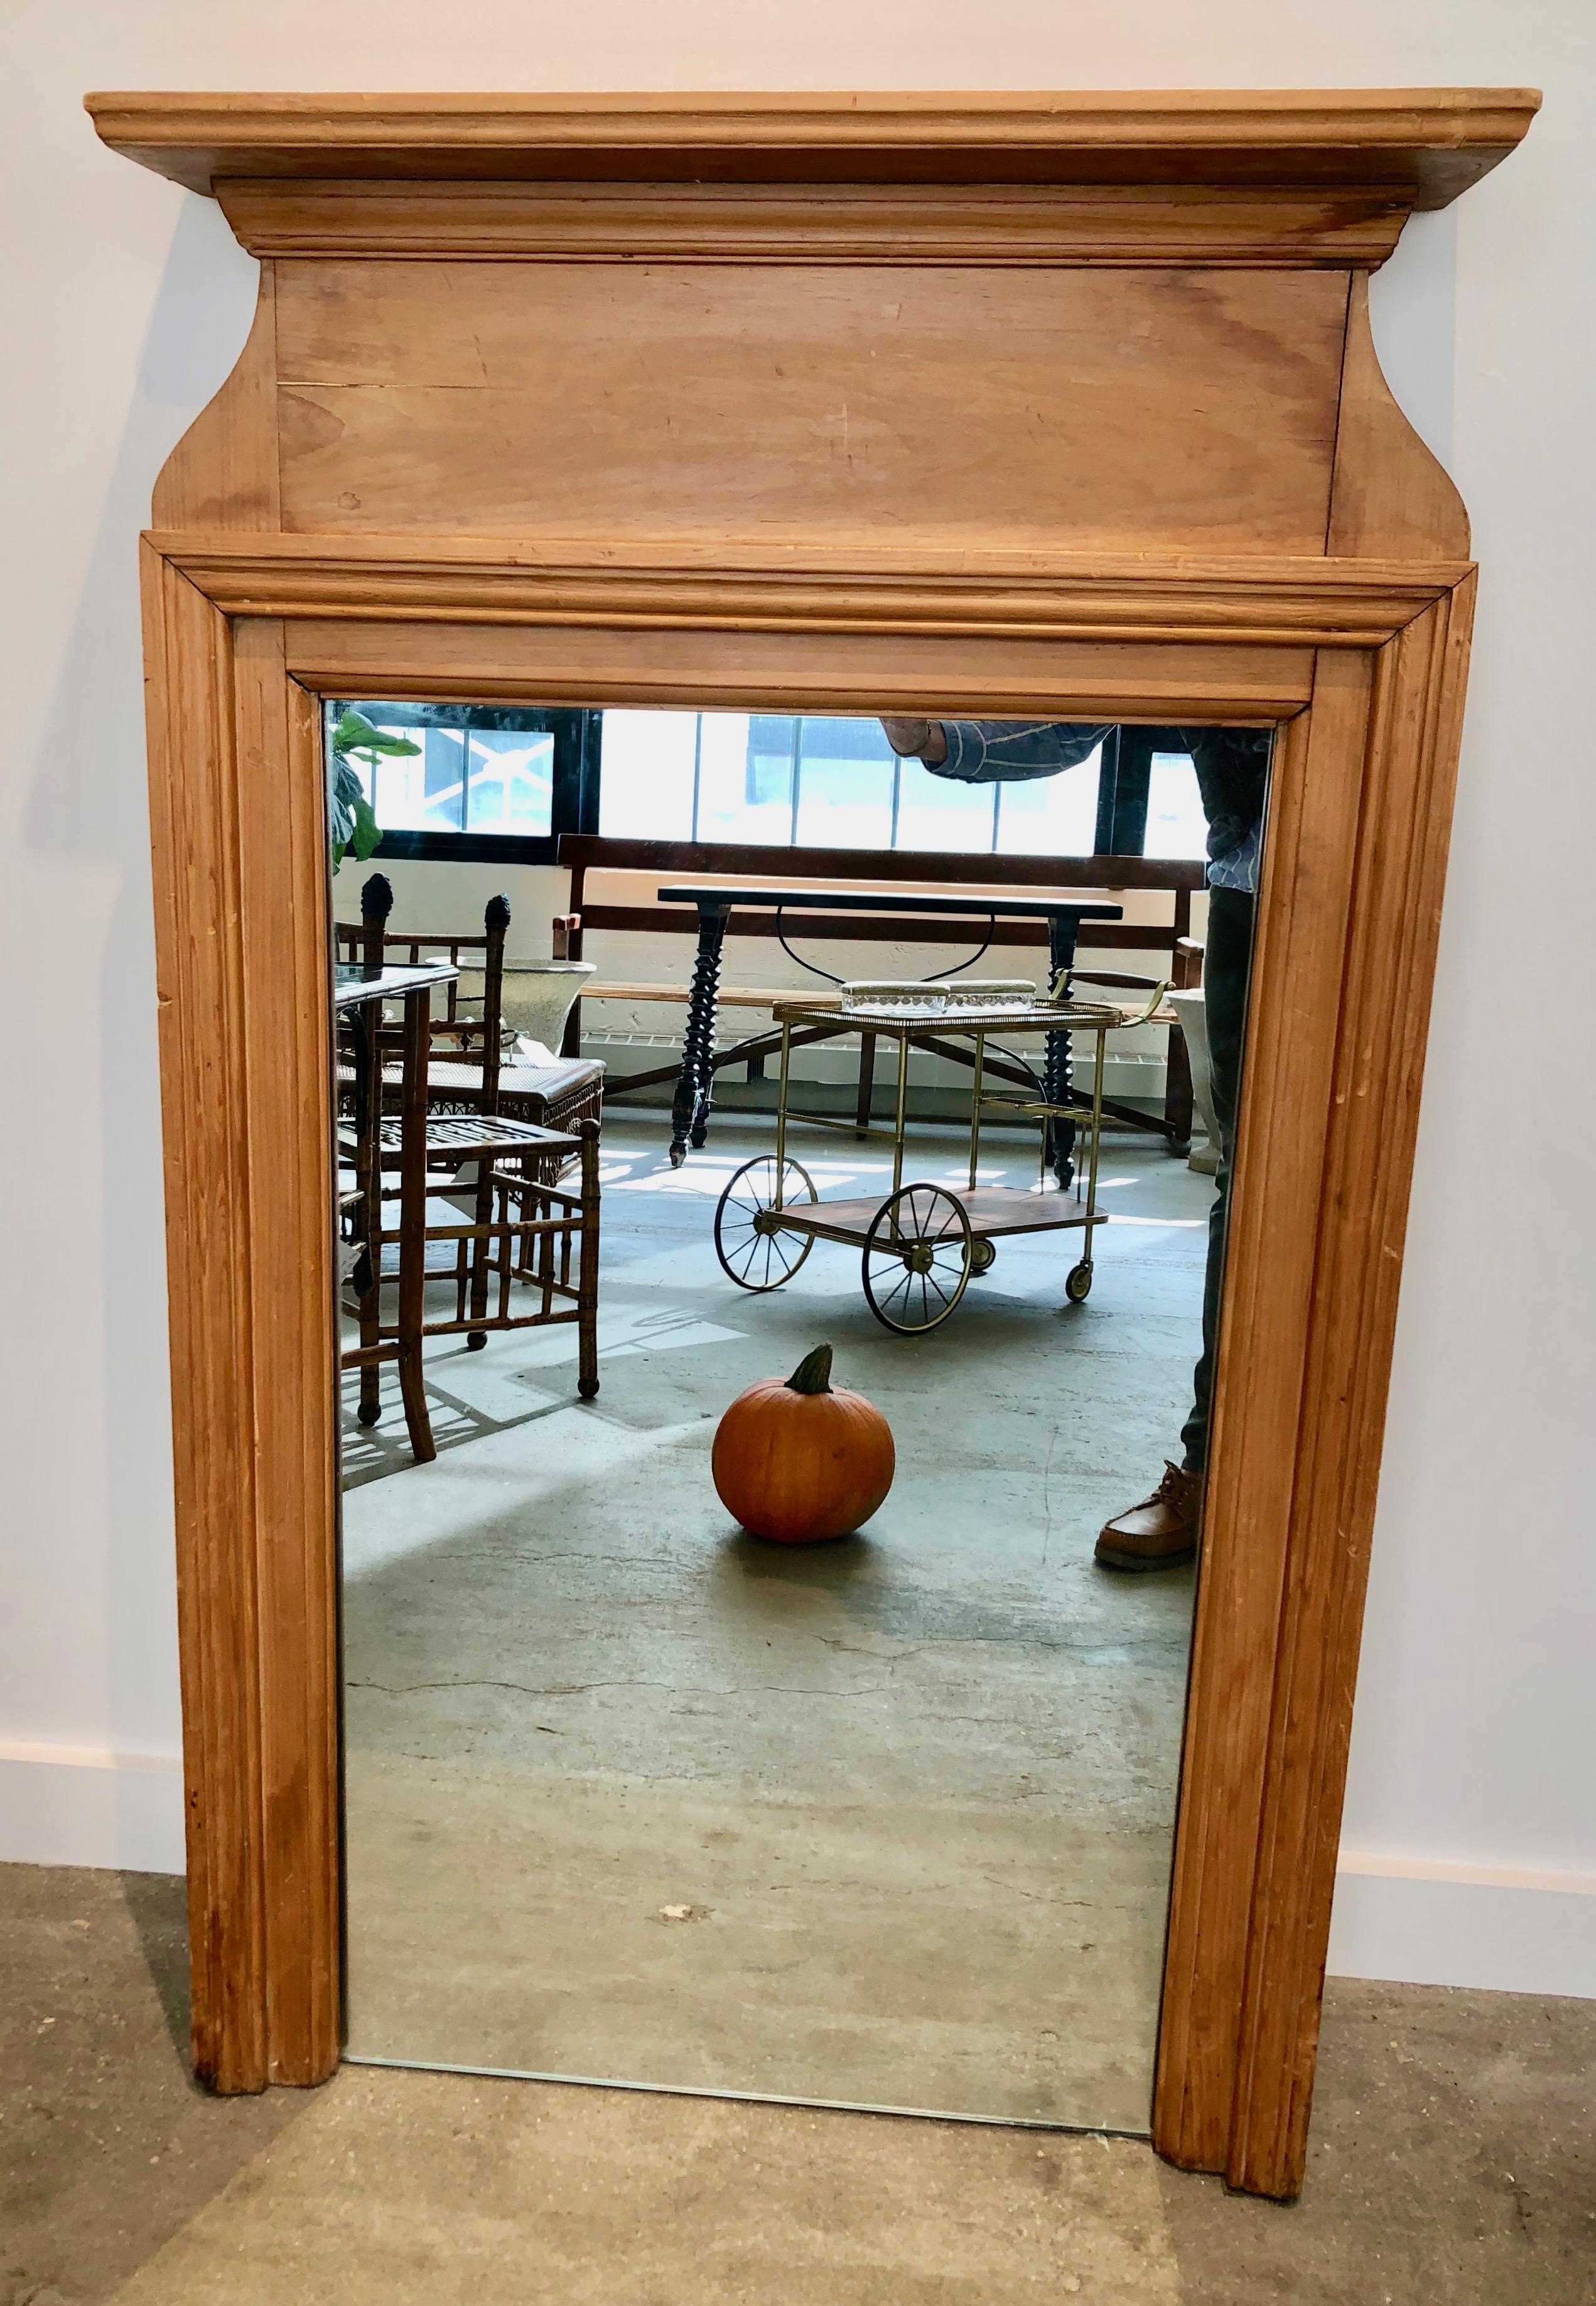 19th century Irish mantel (fireplace) mirror.